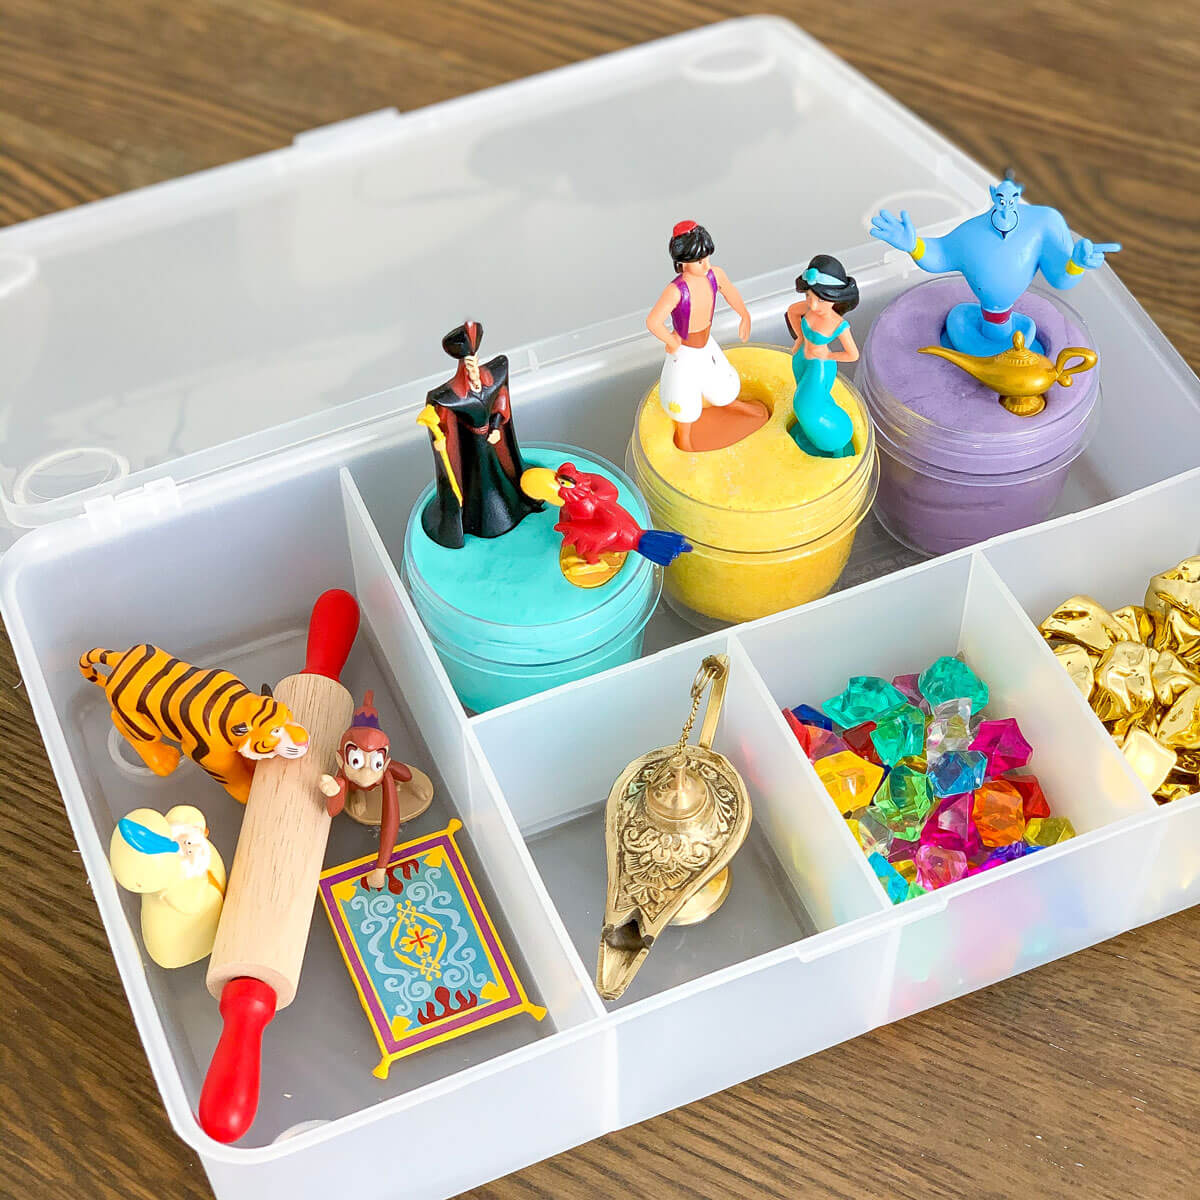 Aladdin Party Idea – How to Make a Themed Play Dough Kit